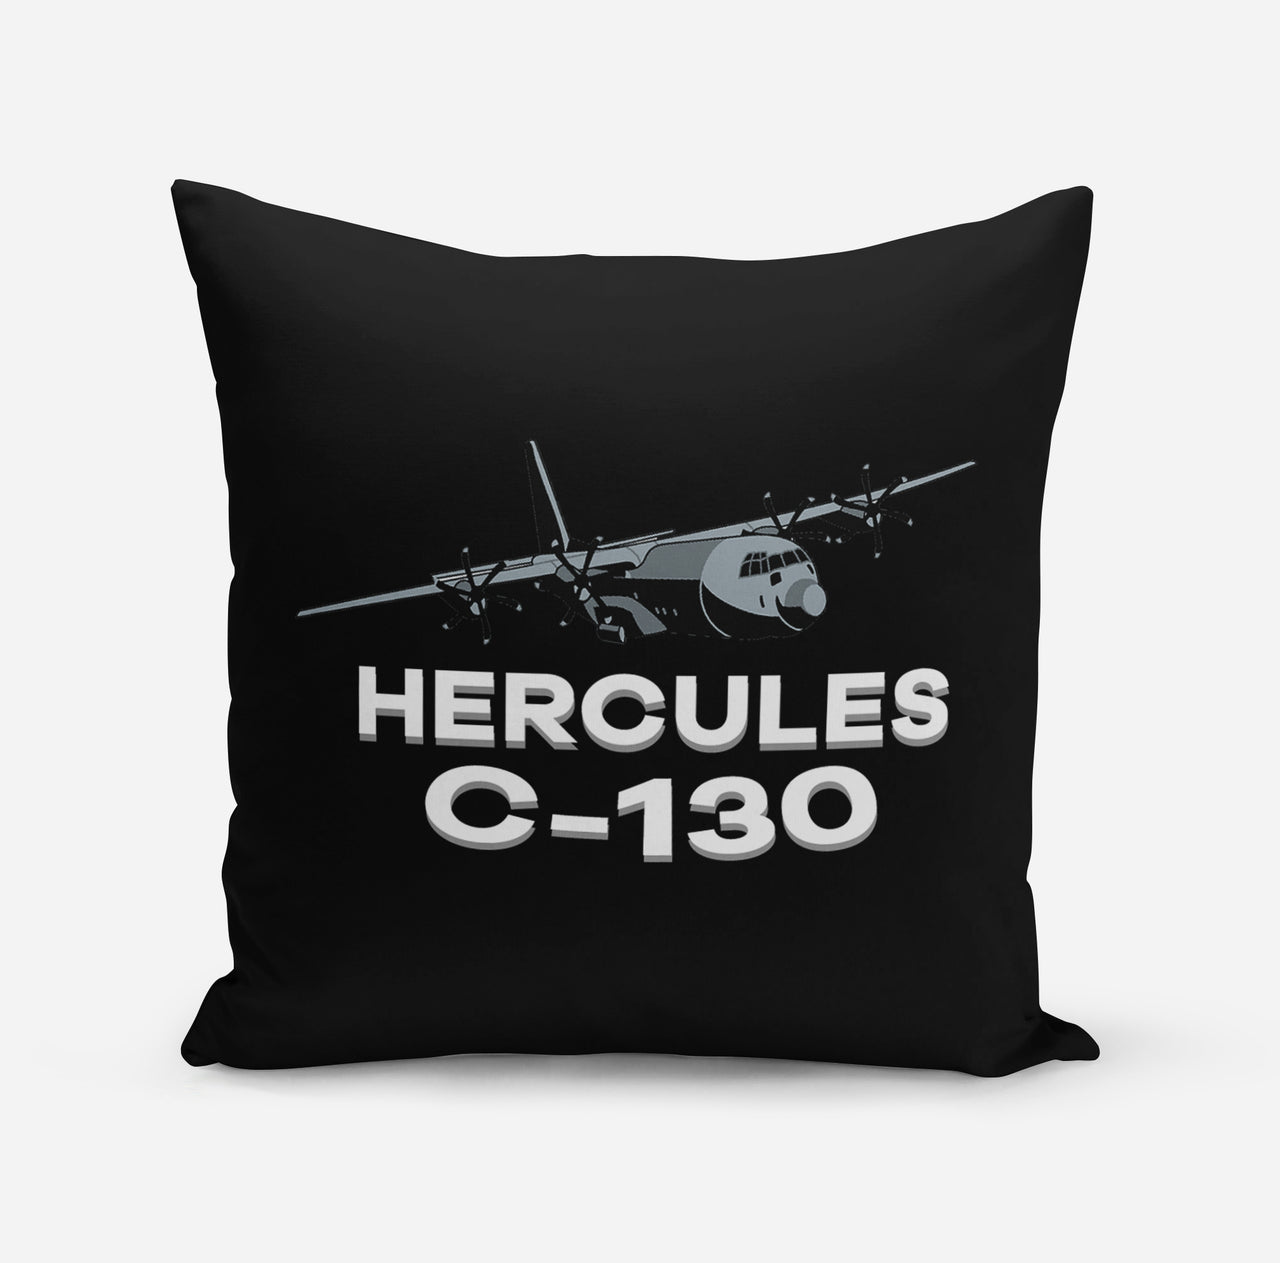 The Hercules C130 Designed Pillows